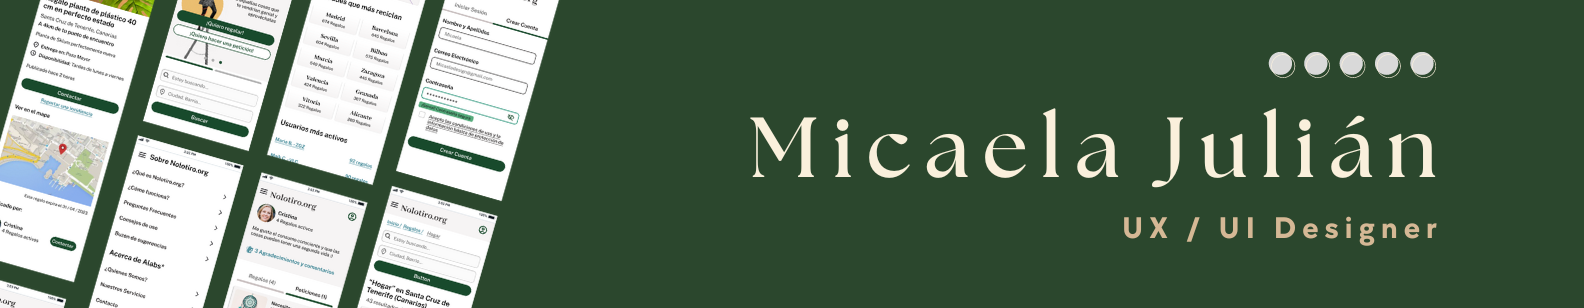 Micaela Julián's profile banner